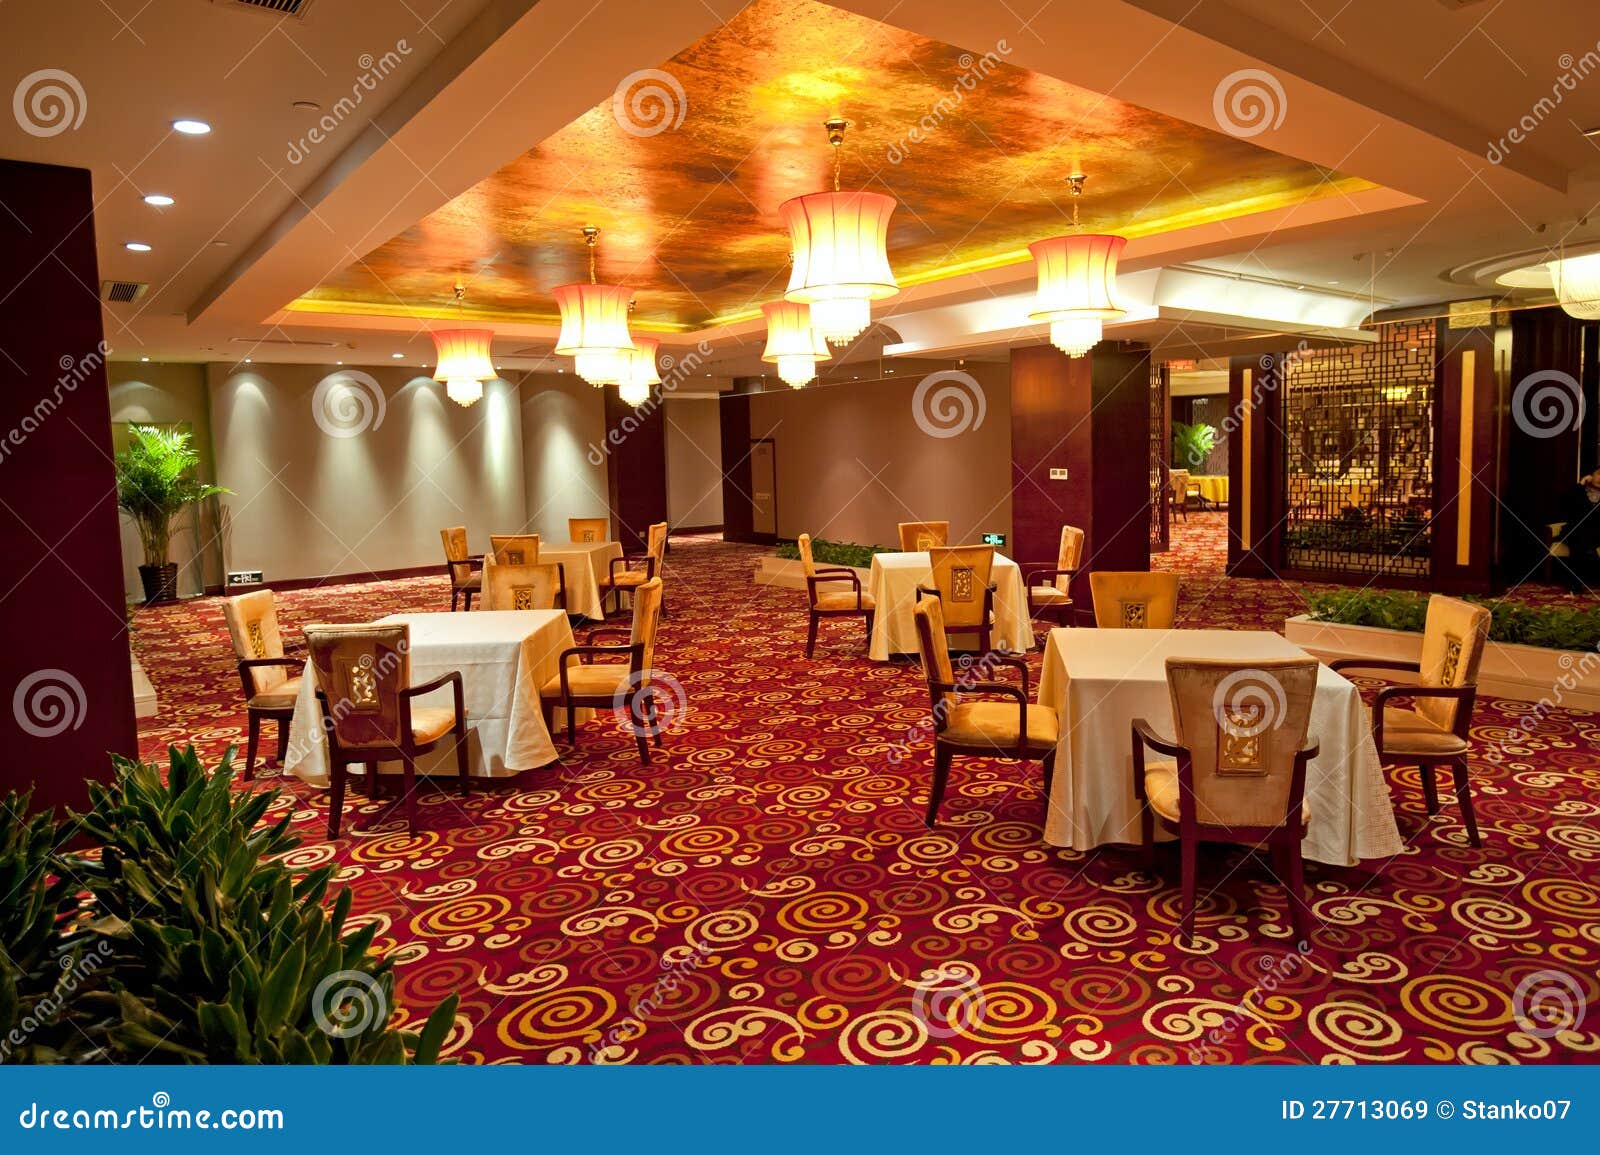 Empty restaurant stock image. Image of decor, chic, beautiful - 27713069